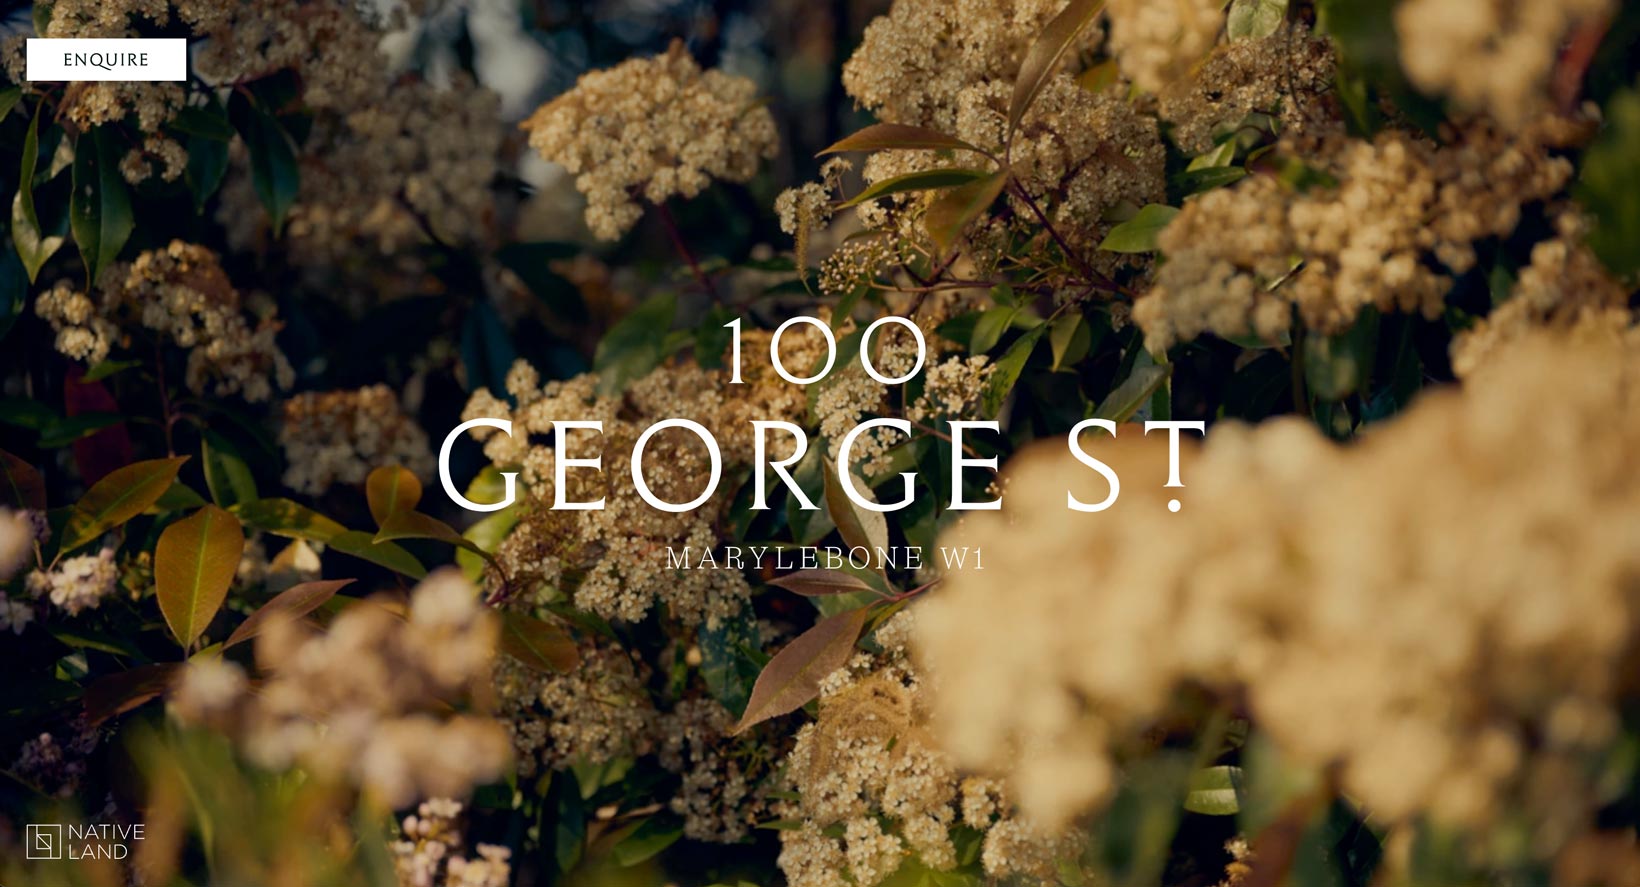 Register your interest on 100 George Street website